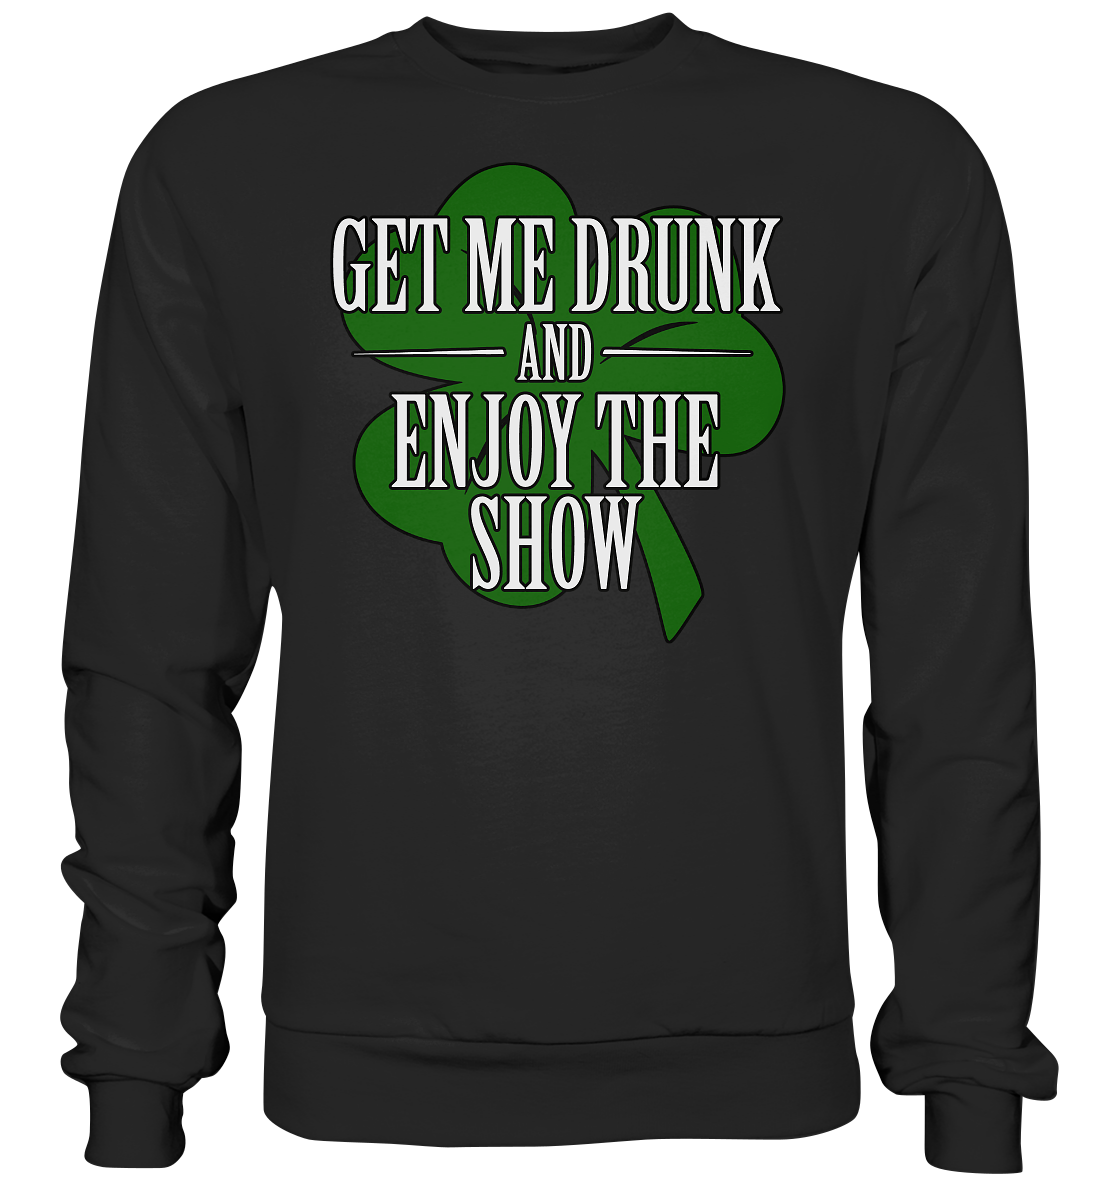 Get Me Drunk "And Enjoy The Show / Shamrock" - Premium Sweatshirt